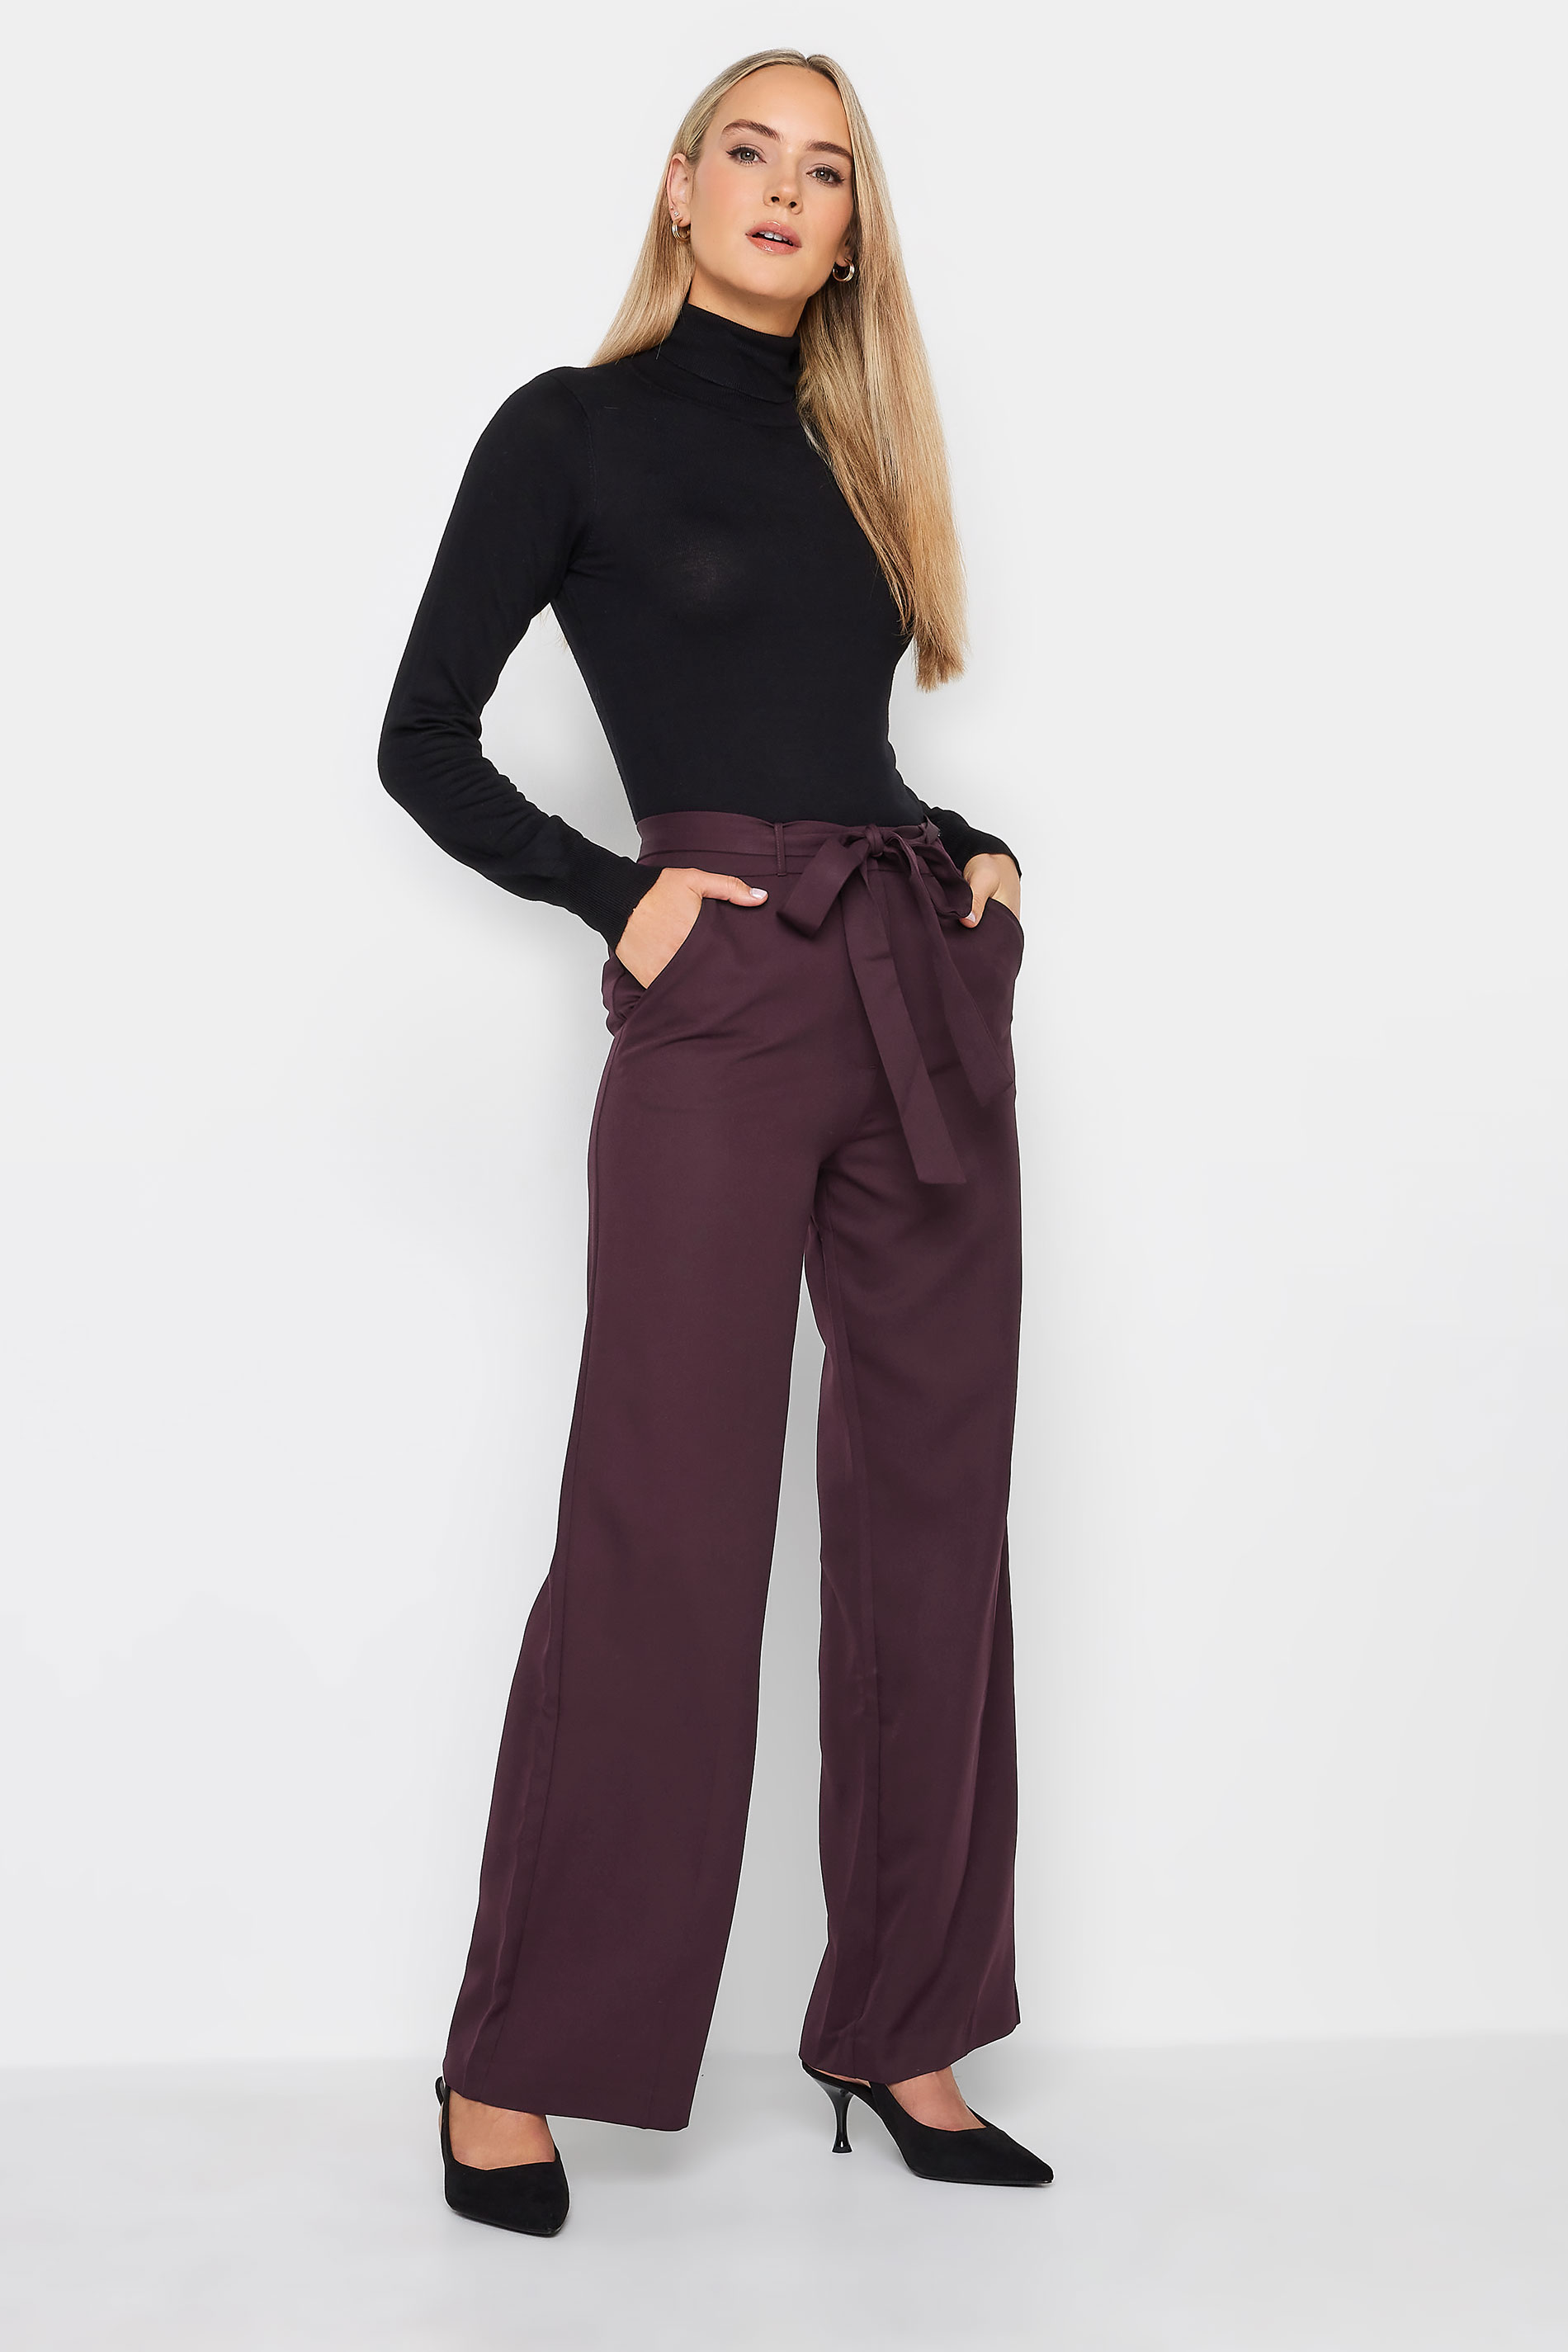 LTS Tall Women's Burgundy Red Wide Leg Trousers | Long Tall Sally 2